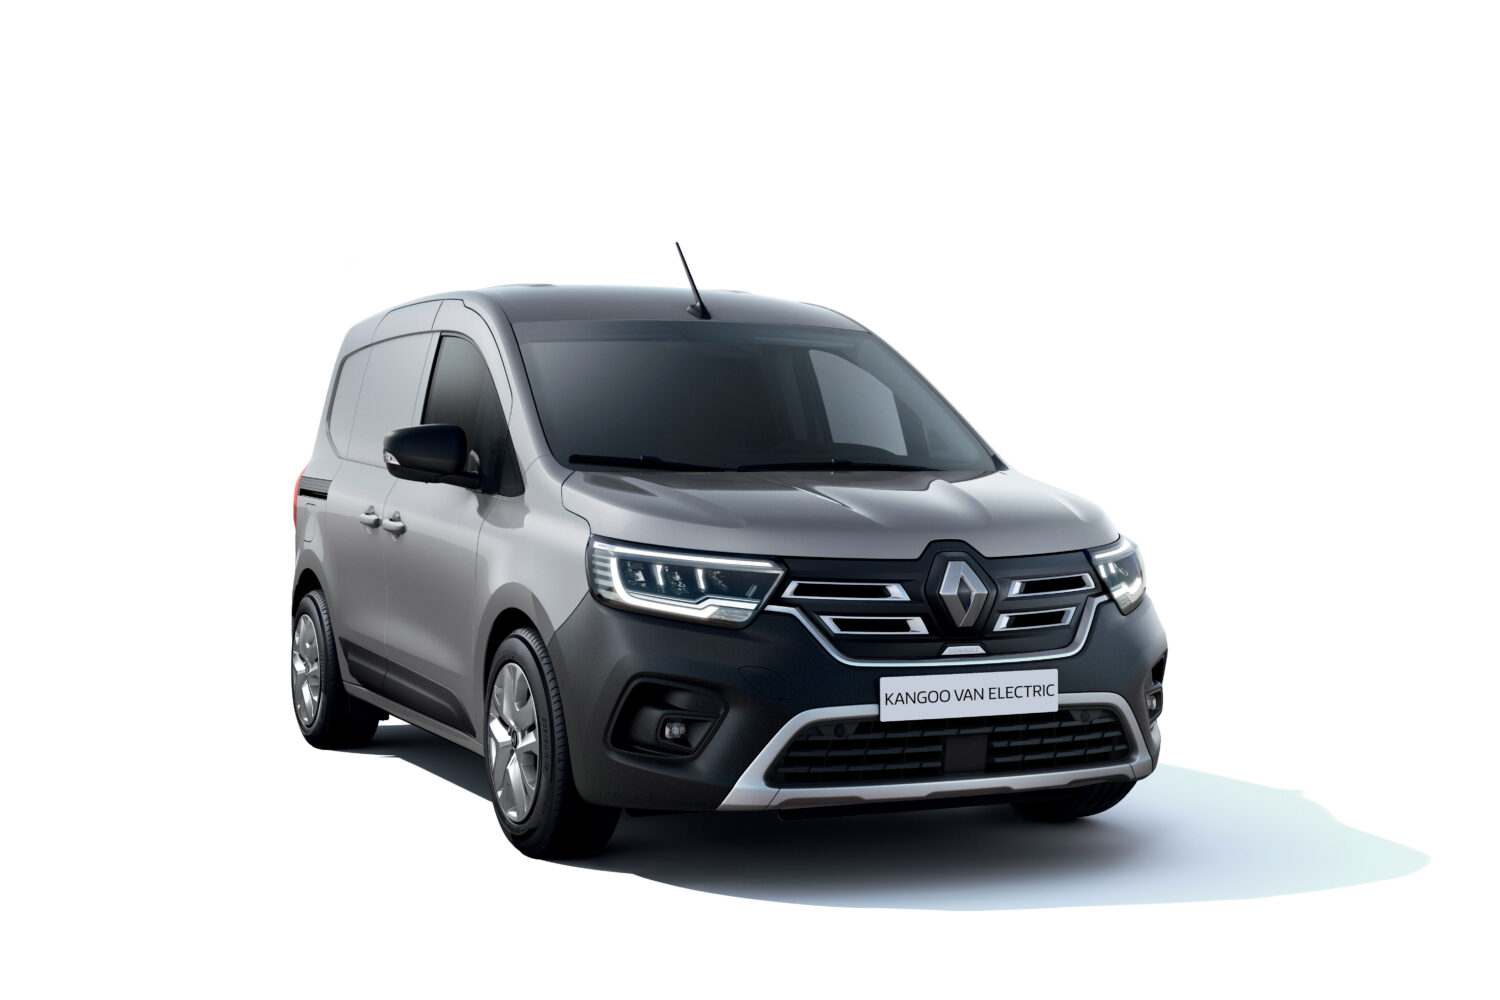 2021 - New Renault Kangoo Van E-TECH Electric